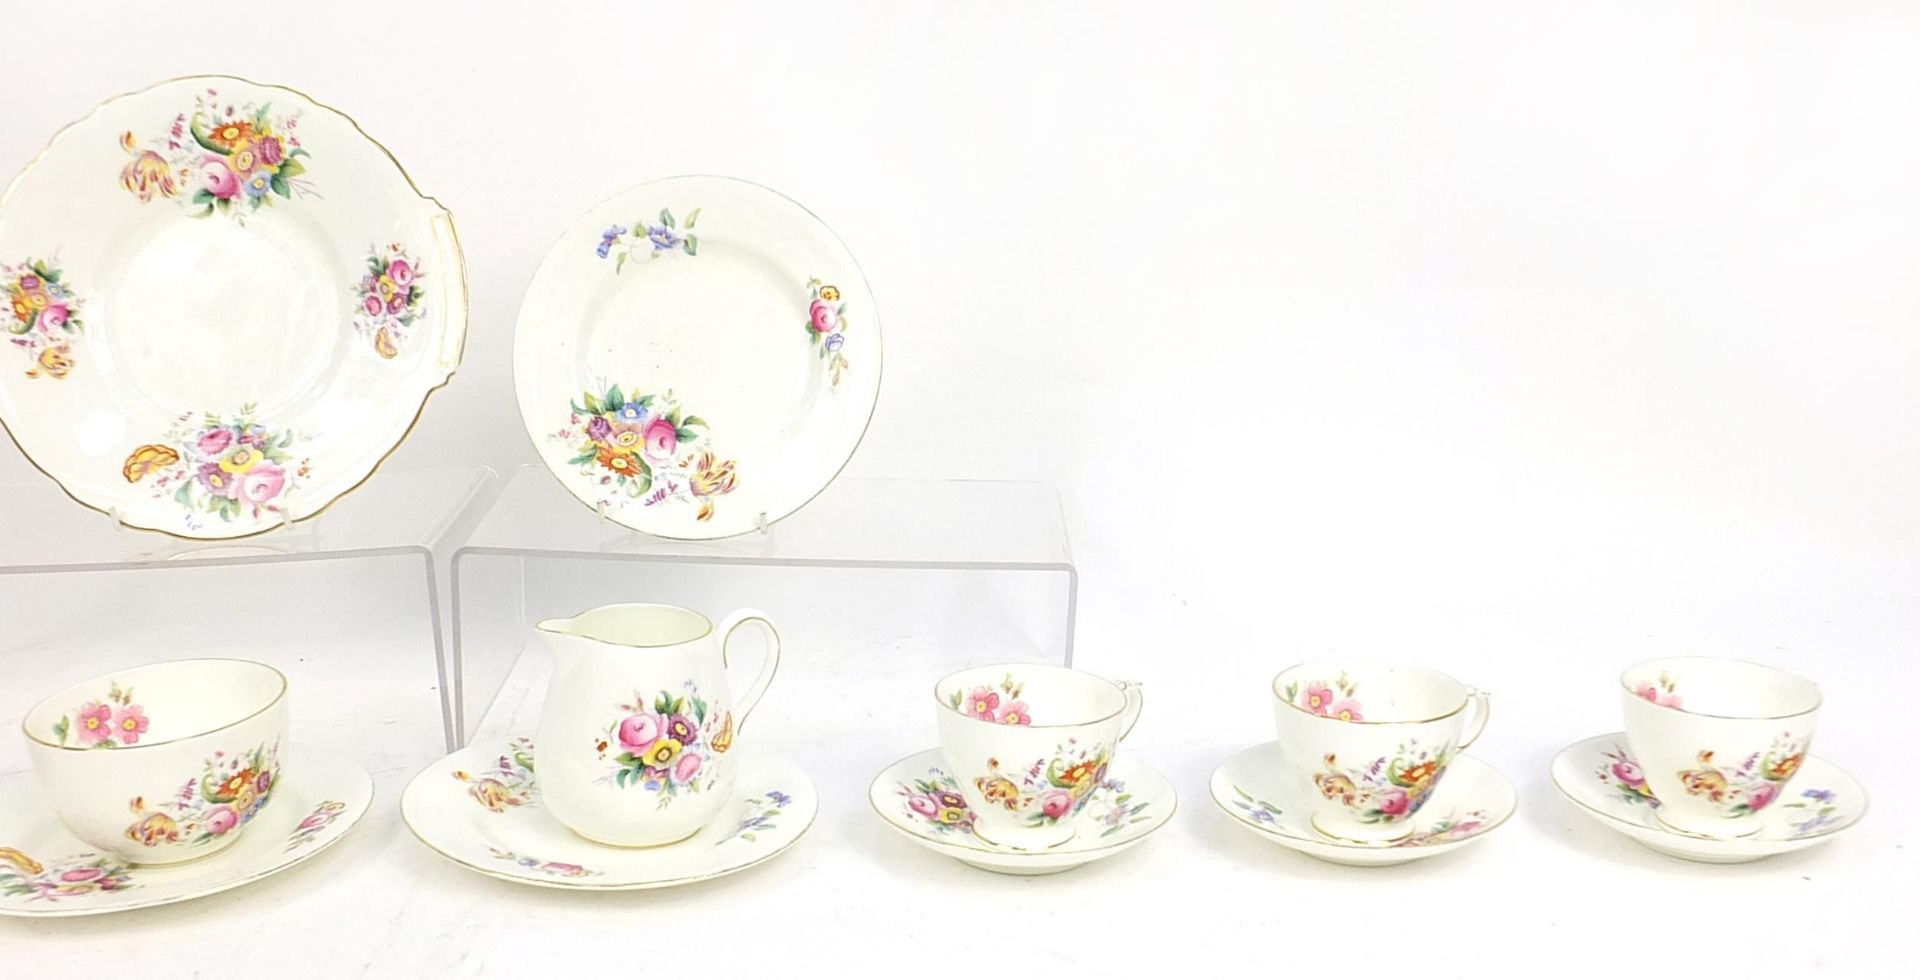 George Jones Crescent June Time floral teaware - Image 3 of 3